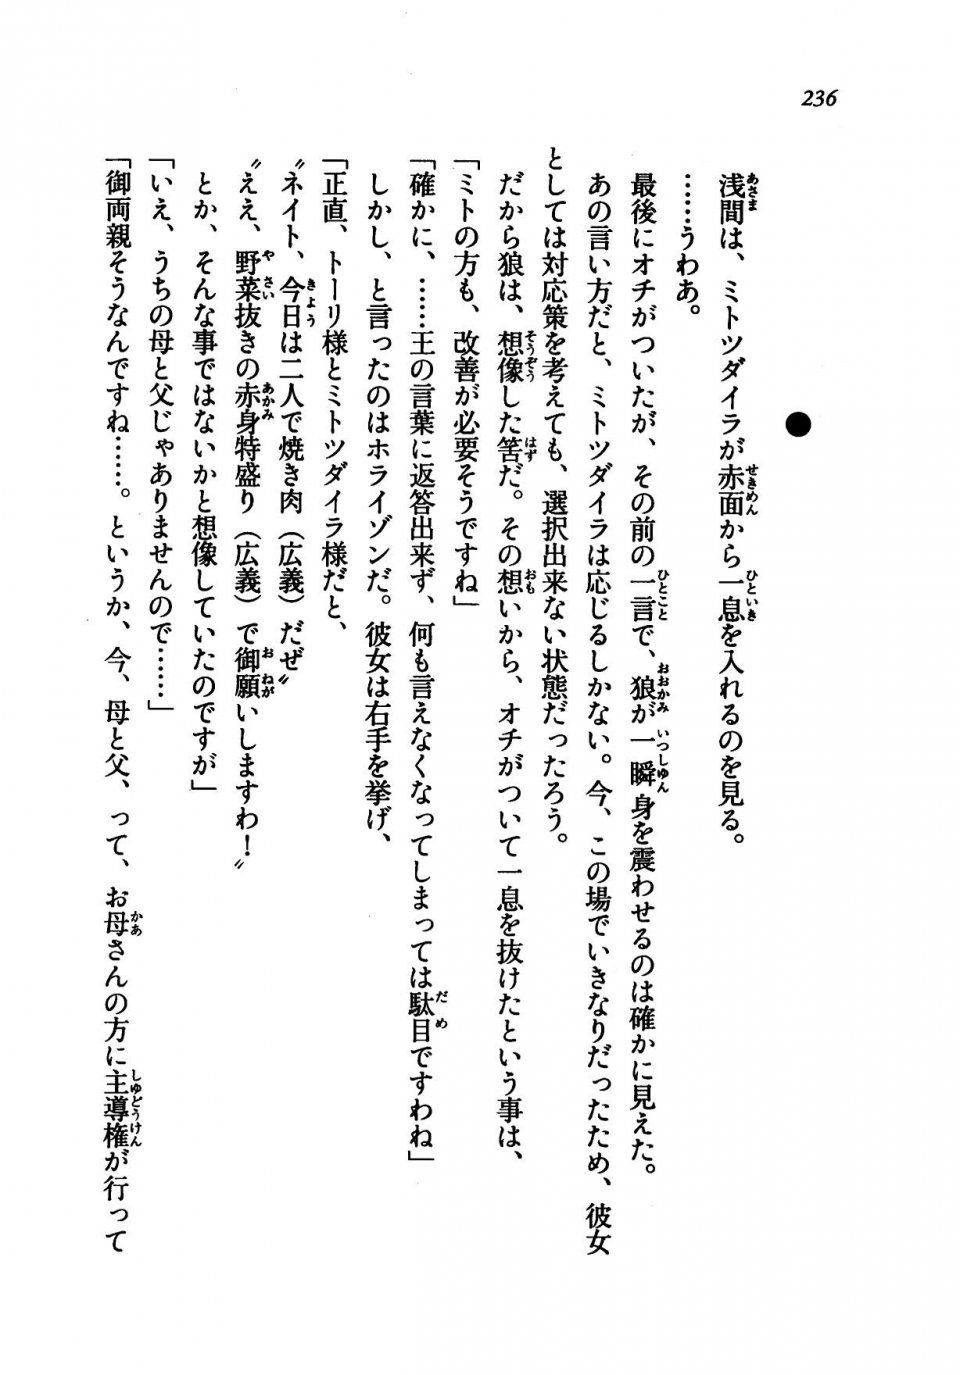 Kyoukai Senjou no Horizon LN Vol 21(8C) Part 1 - Photo #235